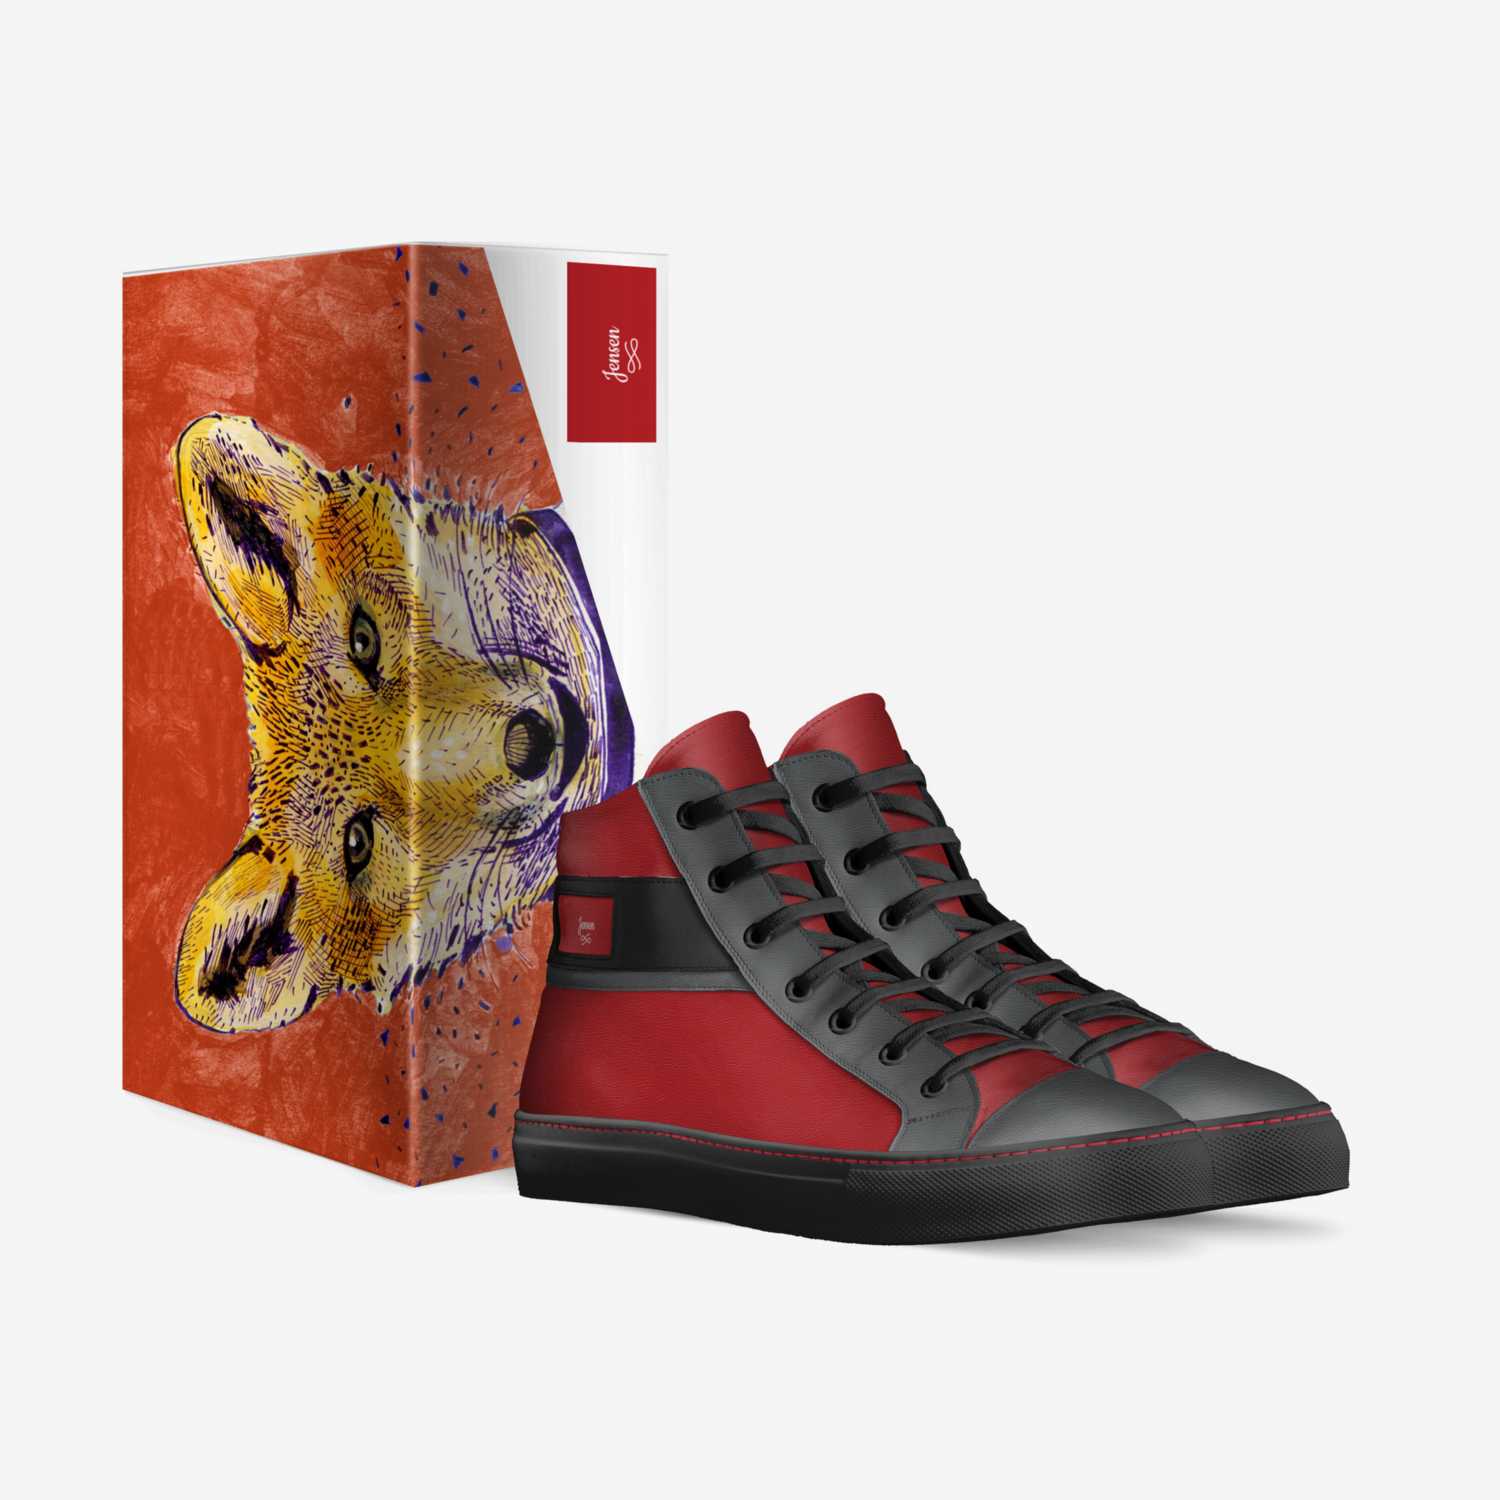 Jaycee custom made in Italy shoes by Jaycee | Box view